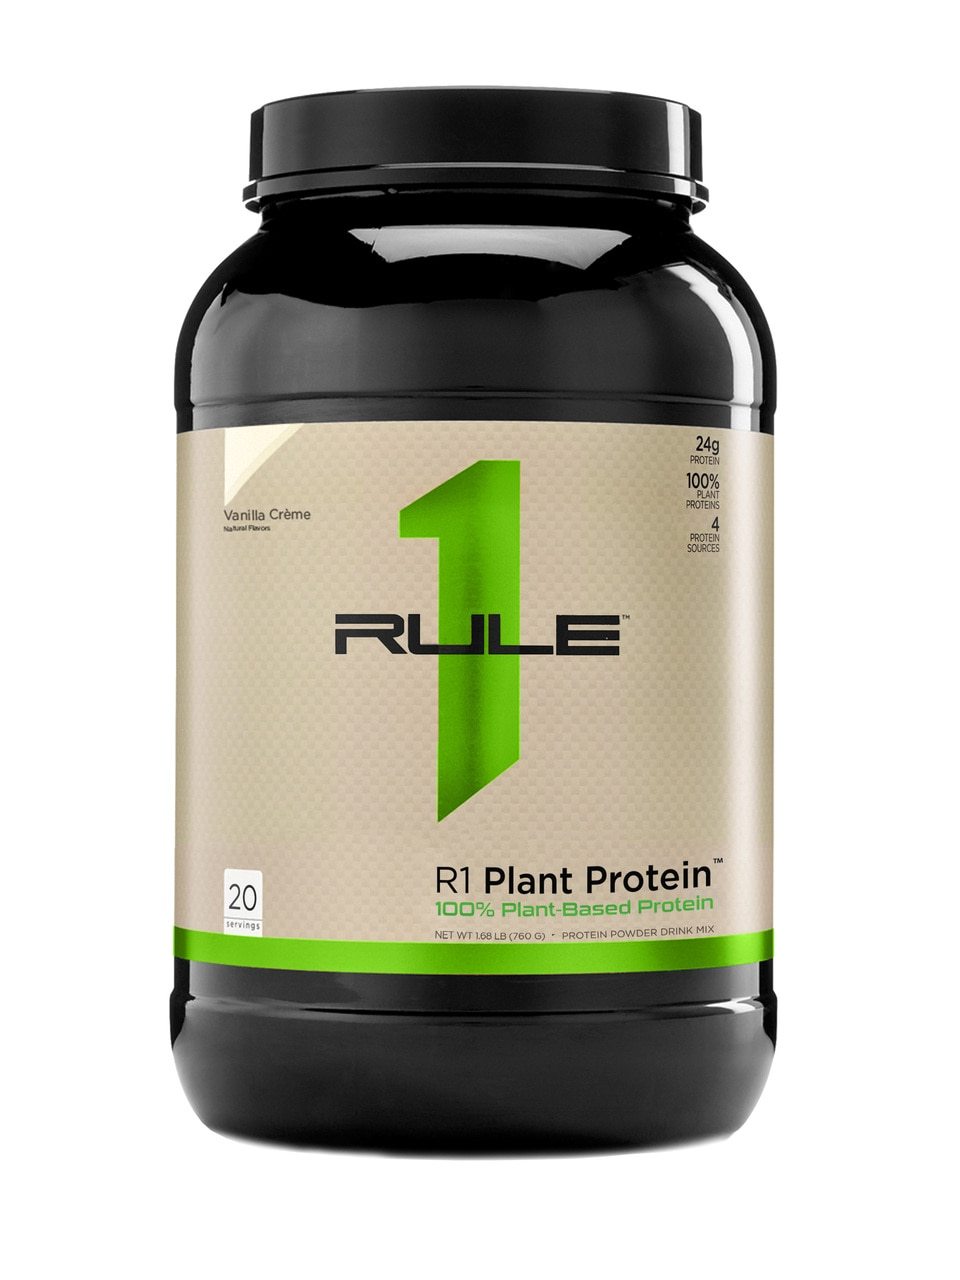 R1 Plant Protein - BodyFactory